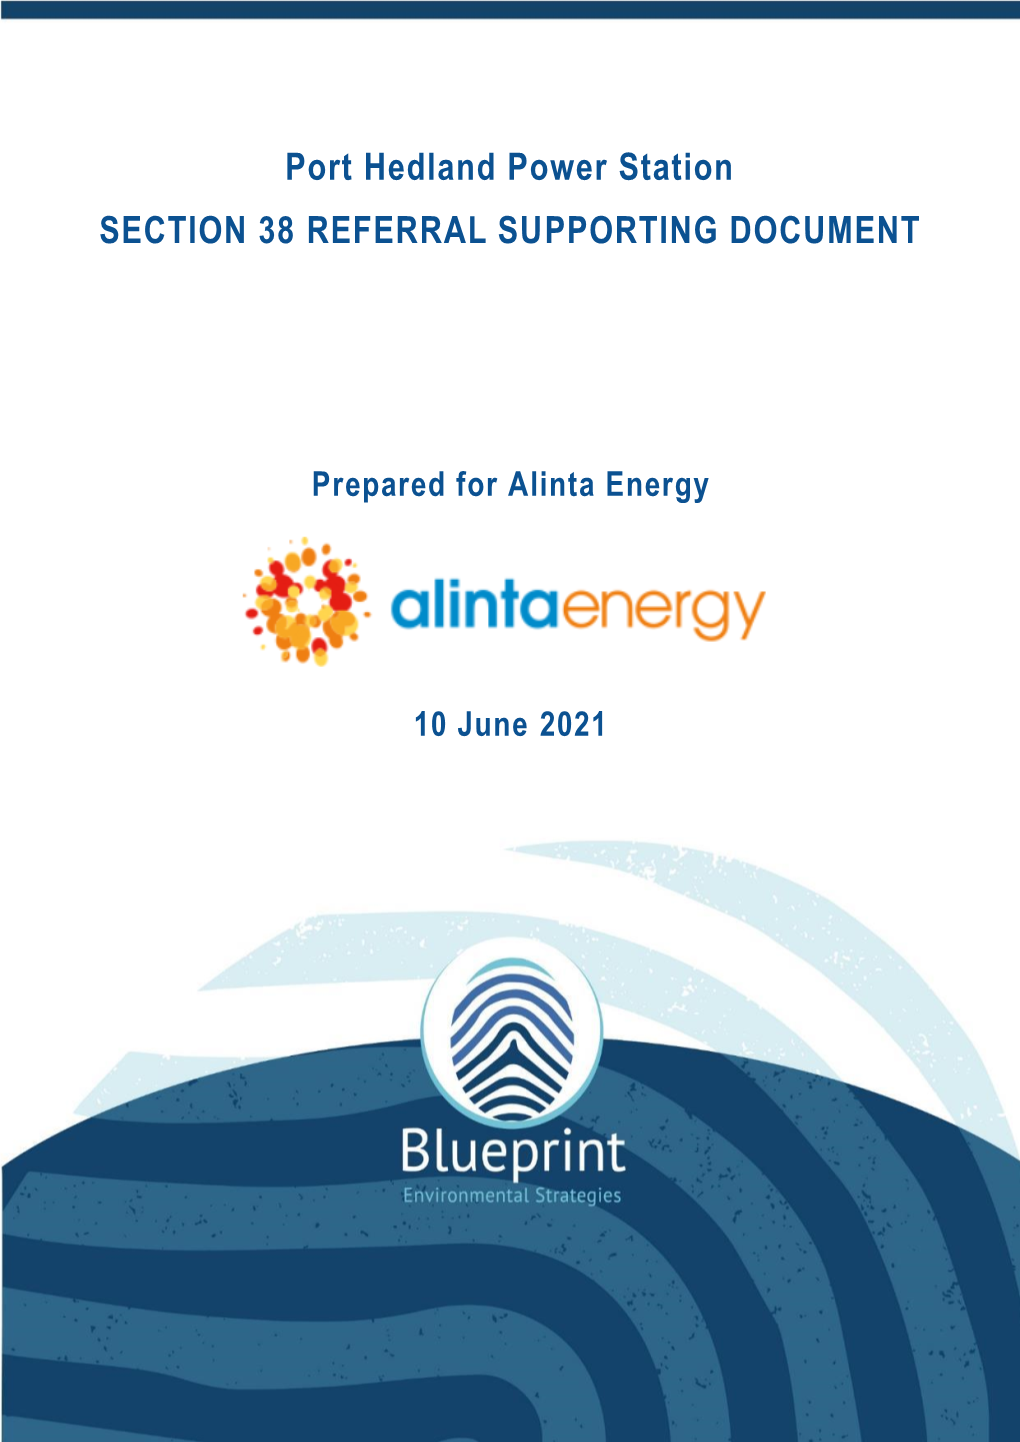 Port Hedland Power Station Expansion | Alinta Energy